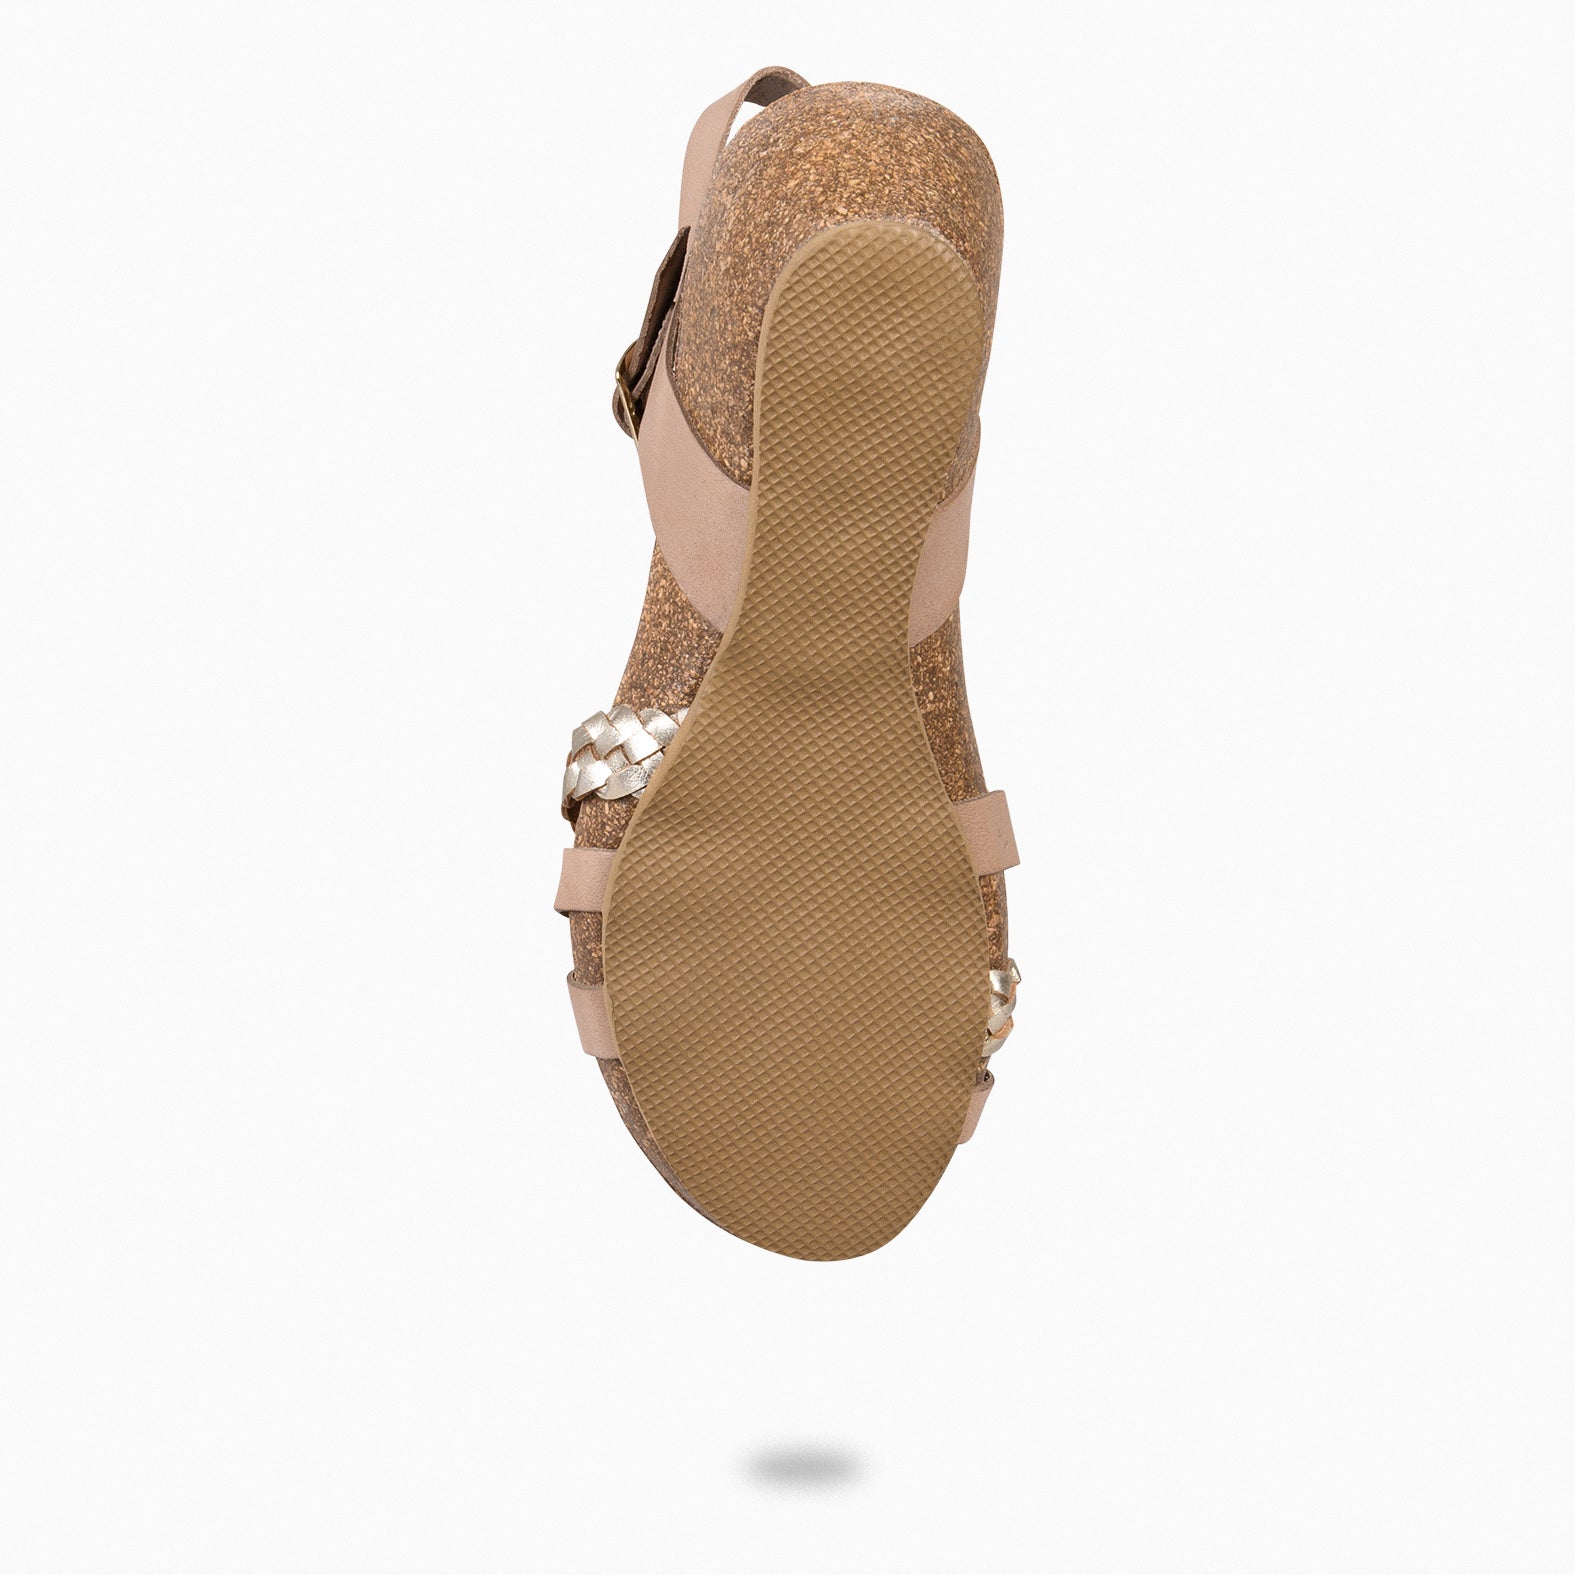 CALATEA – BROWN Women’s Bio Sandals